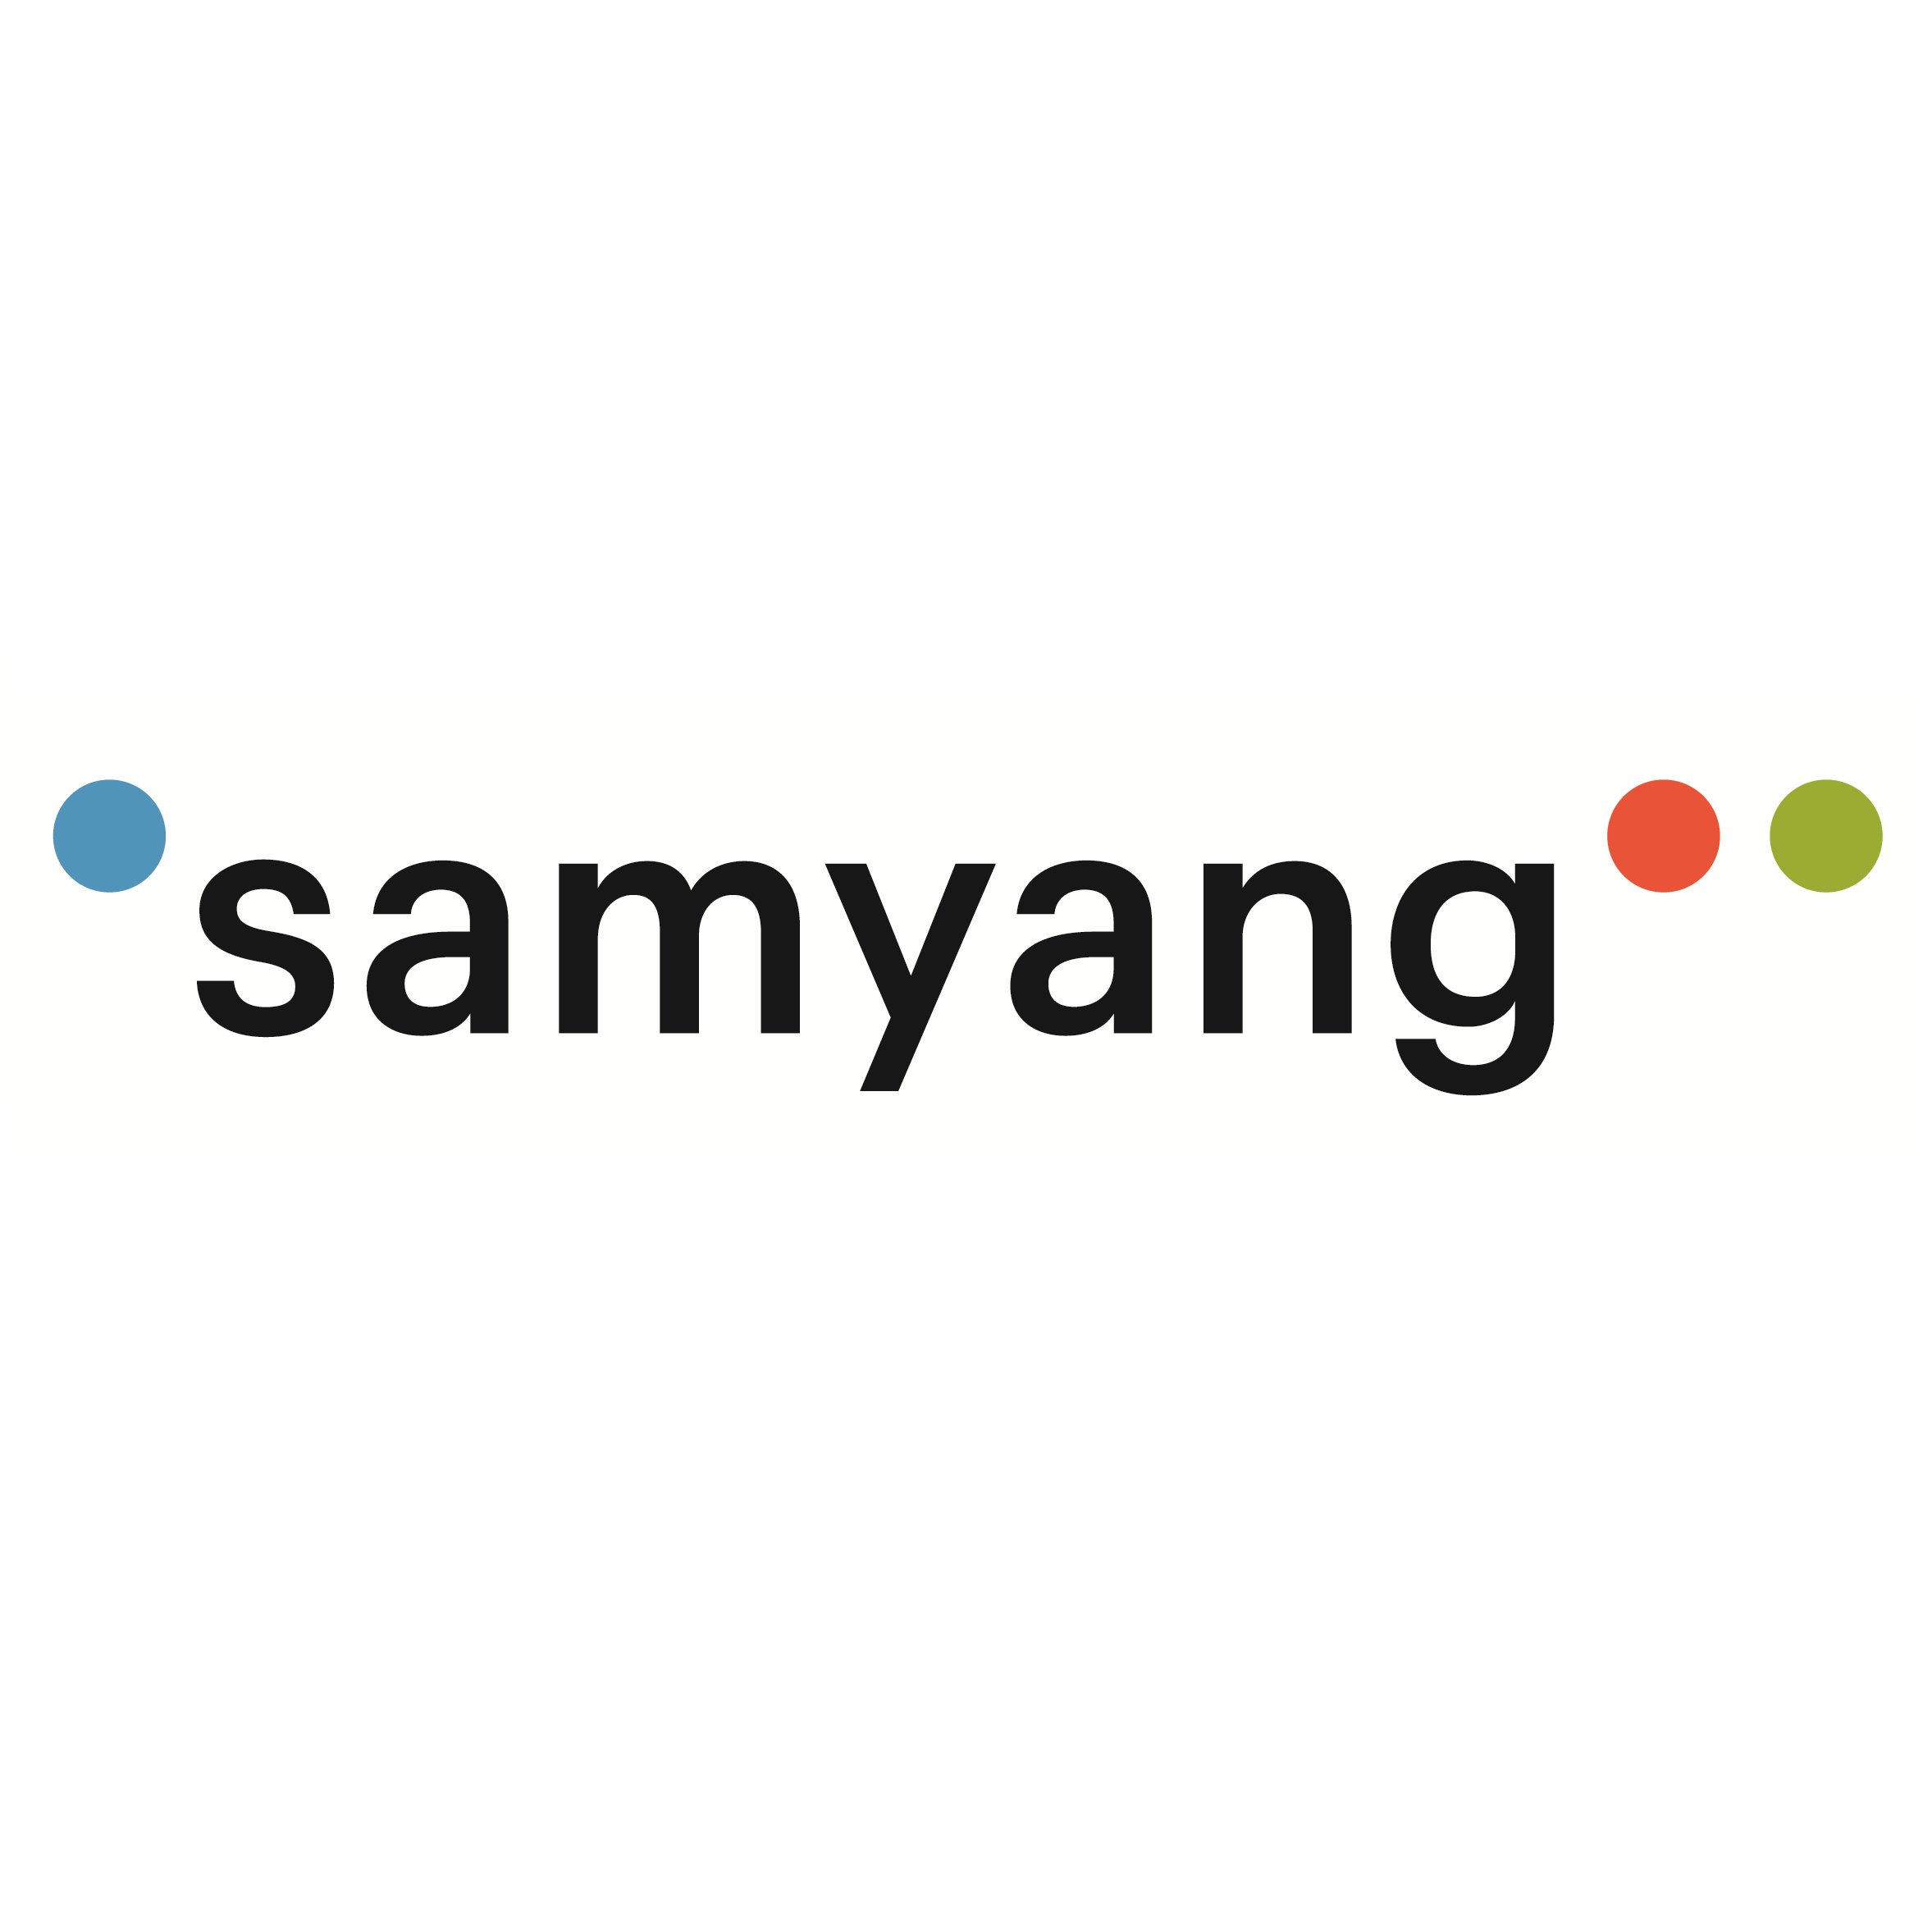 Samyang Holdings Corporation